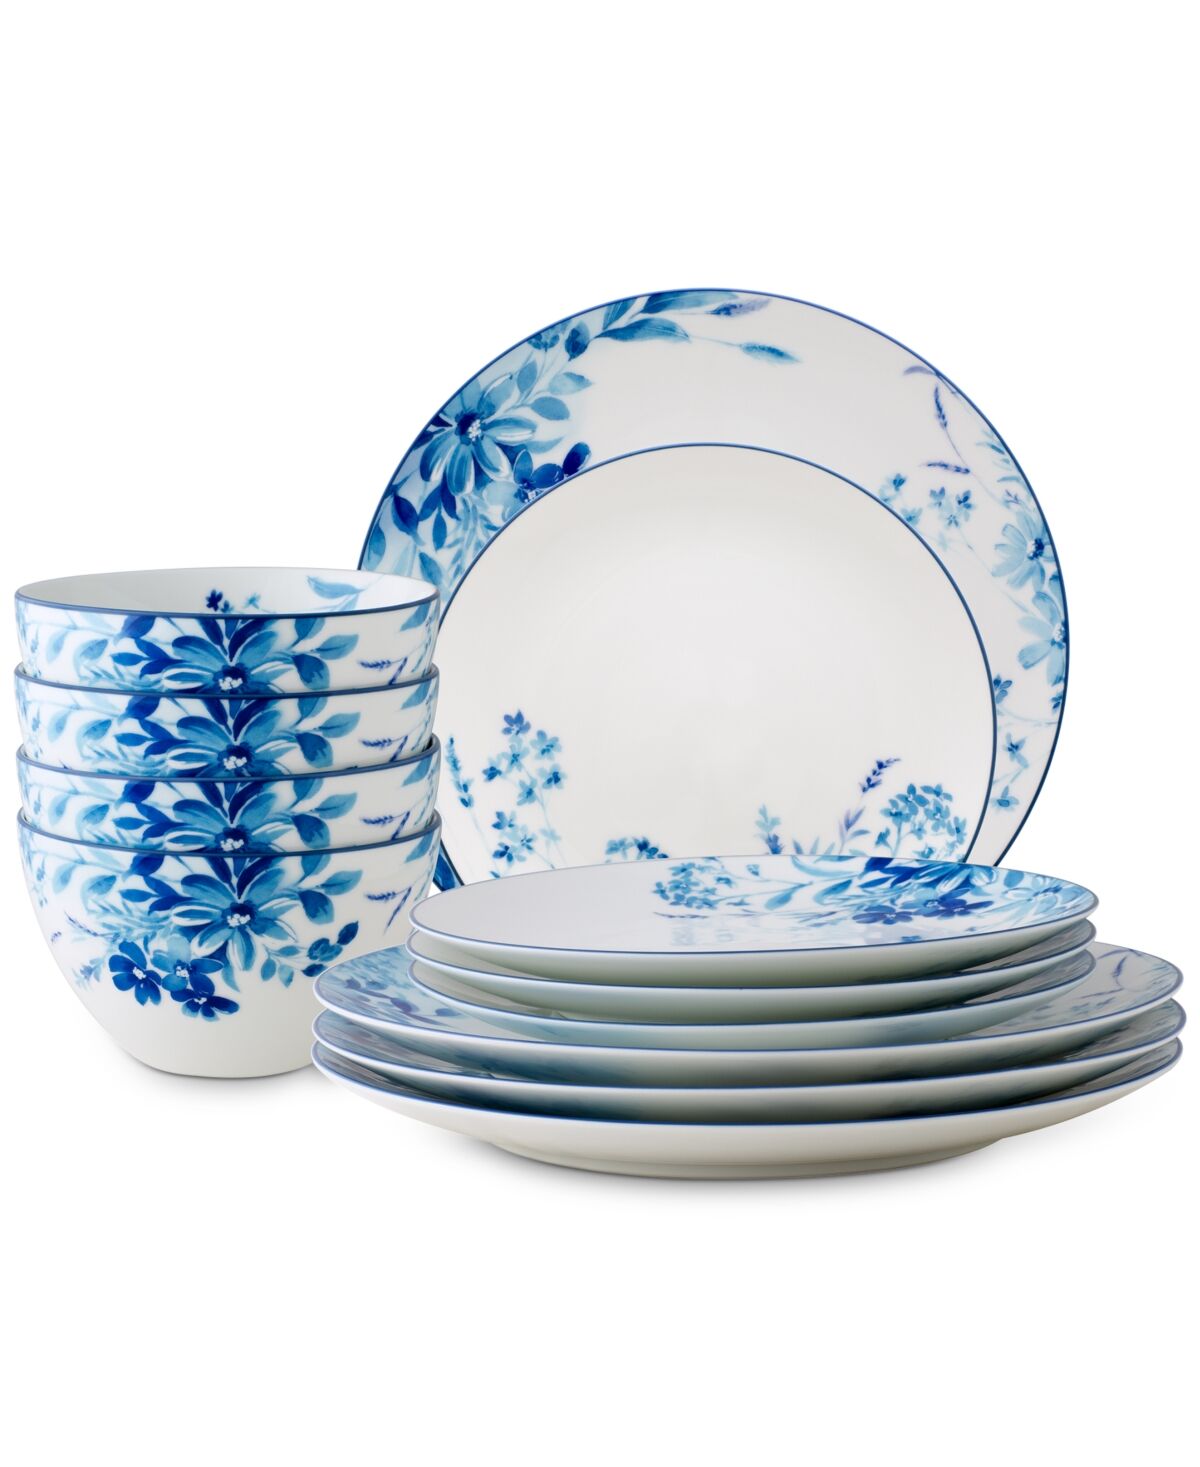 Noritake Blossom Road 12-Pc. Dinnerware Set - White/blue